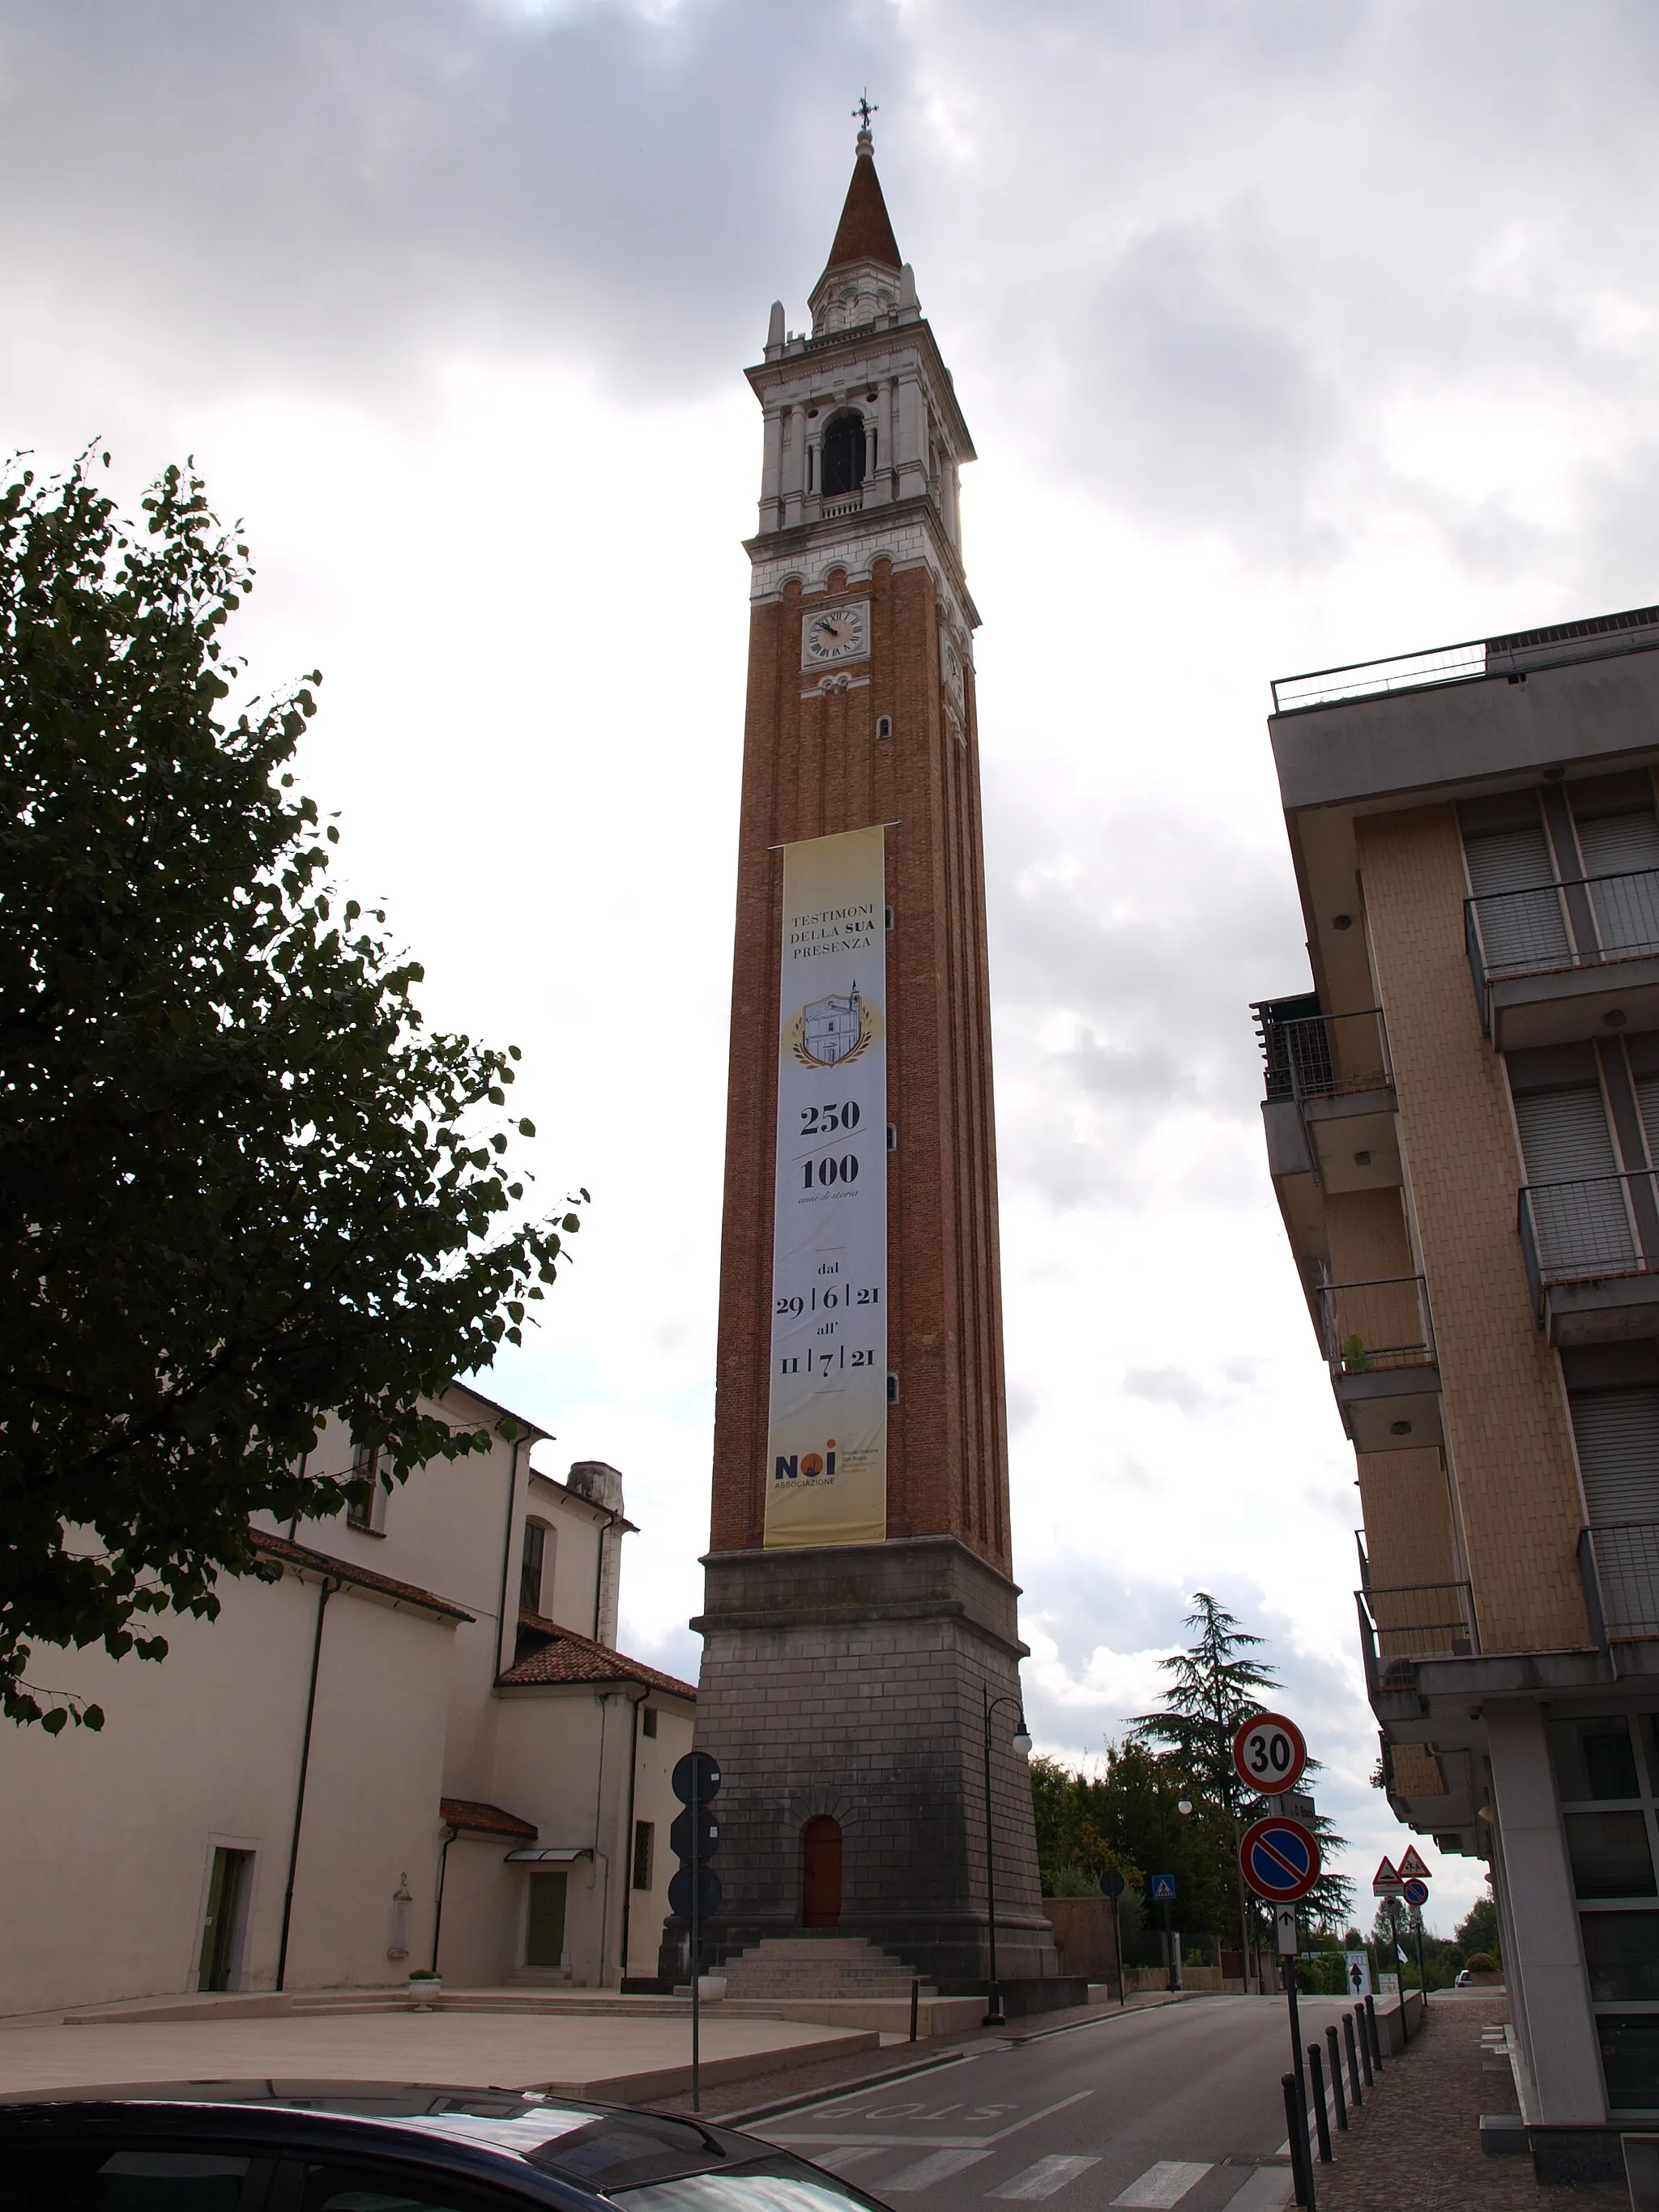 Photo showing: The bell tower of the chiesa di San Pietro Apostolo (Saint Peter the Apostle church) in Azzano Decimo.